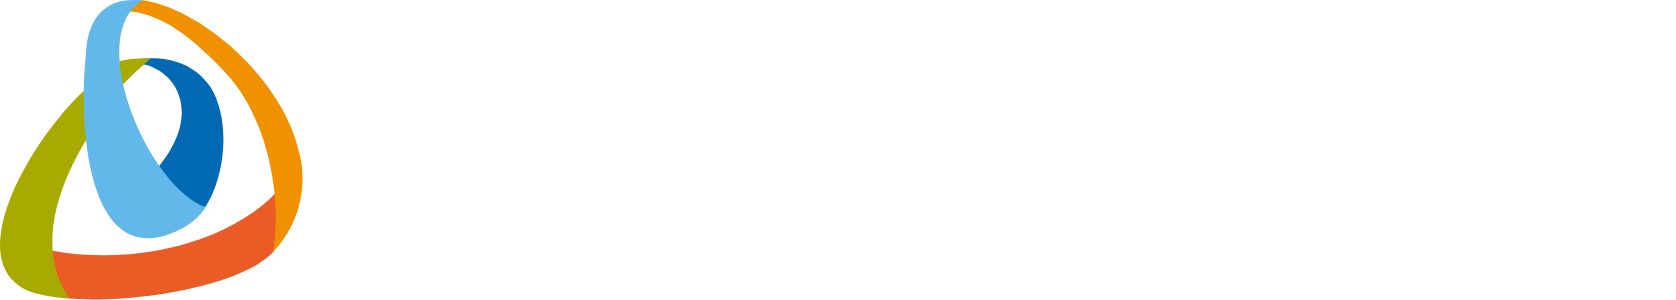 Grid Dynamics Logo groß für dunkle Hintergründe (transparentes PNG)